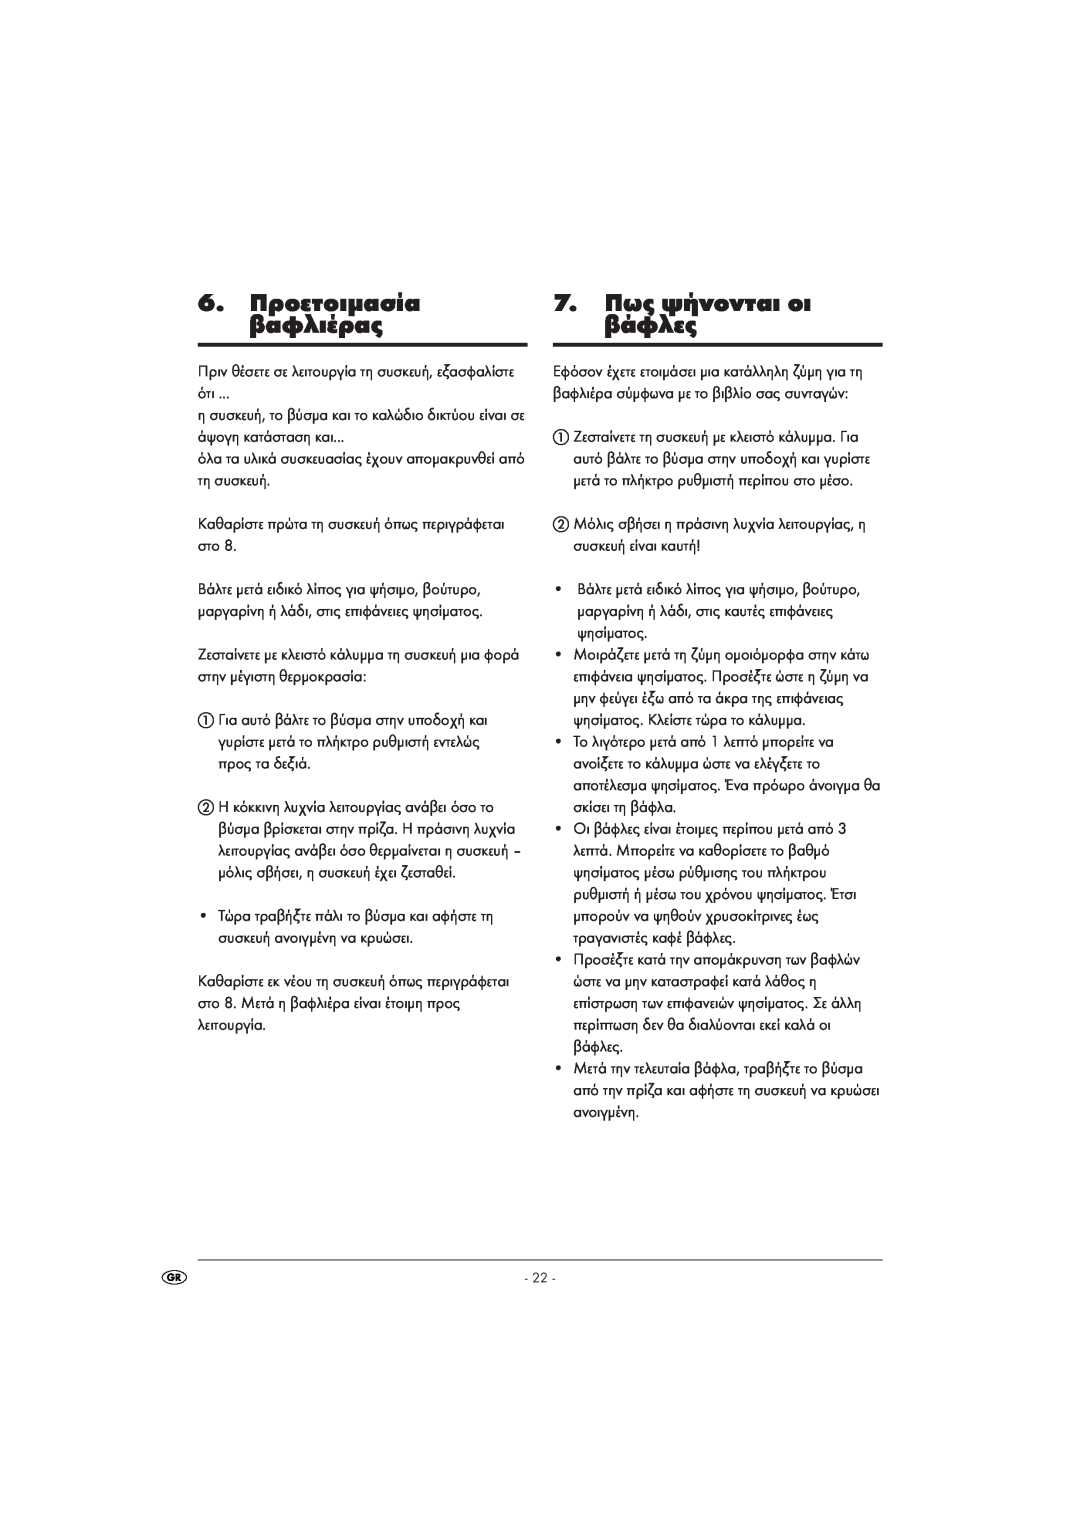 Kompernass KH 1105 manual 6. Προετοιµασία, 7. Πως ψήνονται οι, βαφλιέρας, βάφλες 